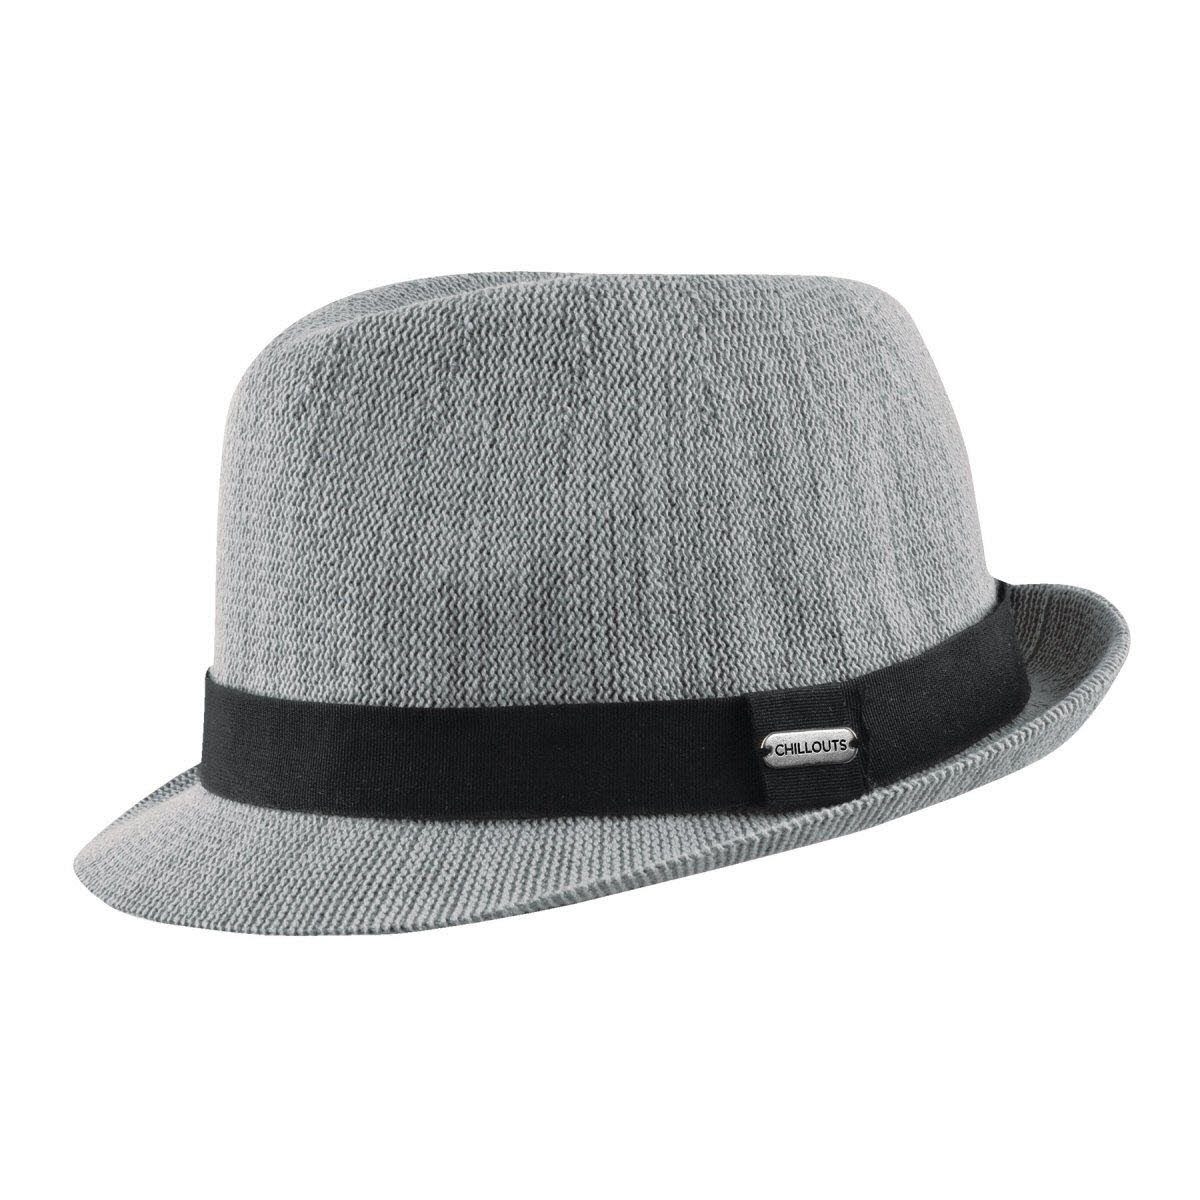 Bardolino chillouts Beanie 21-grey Hat